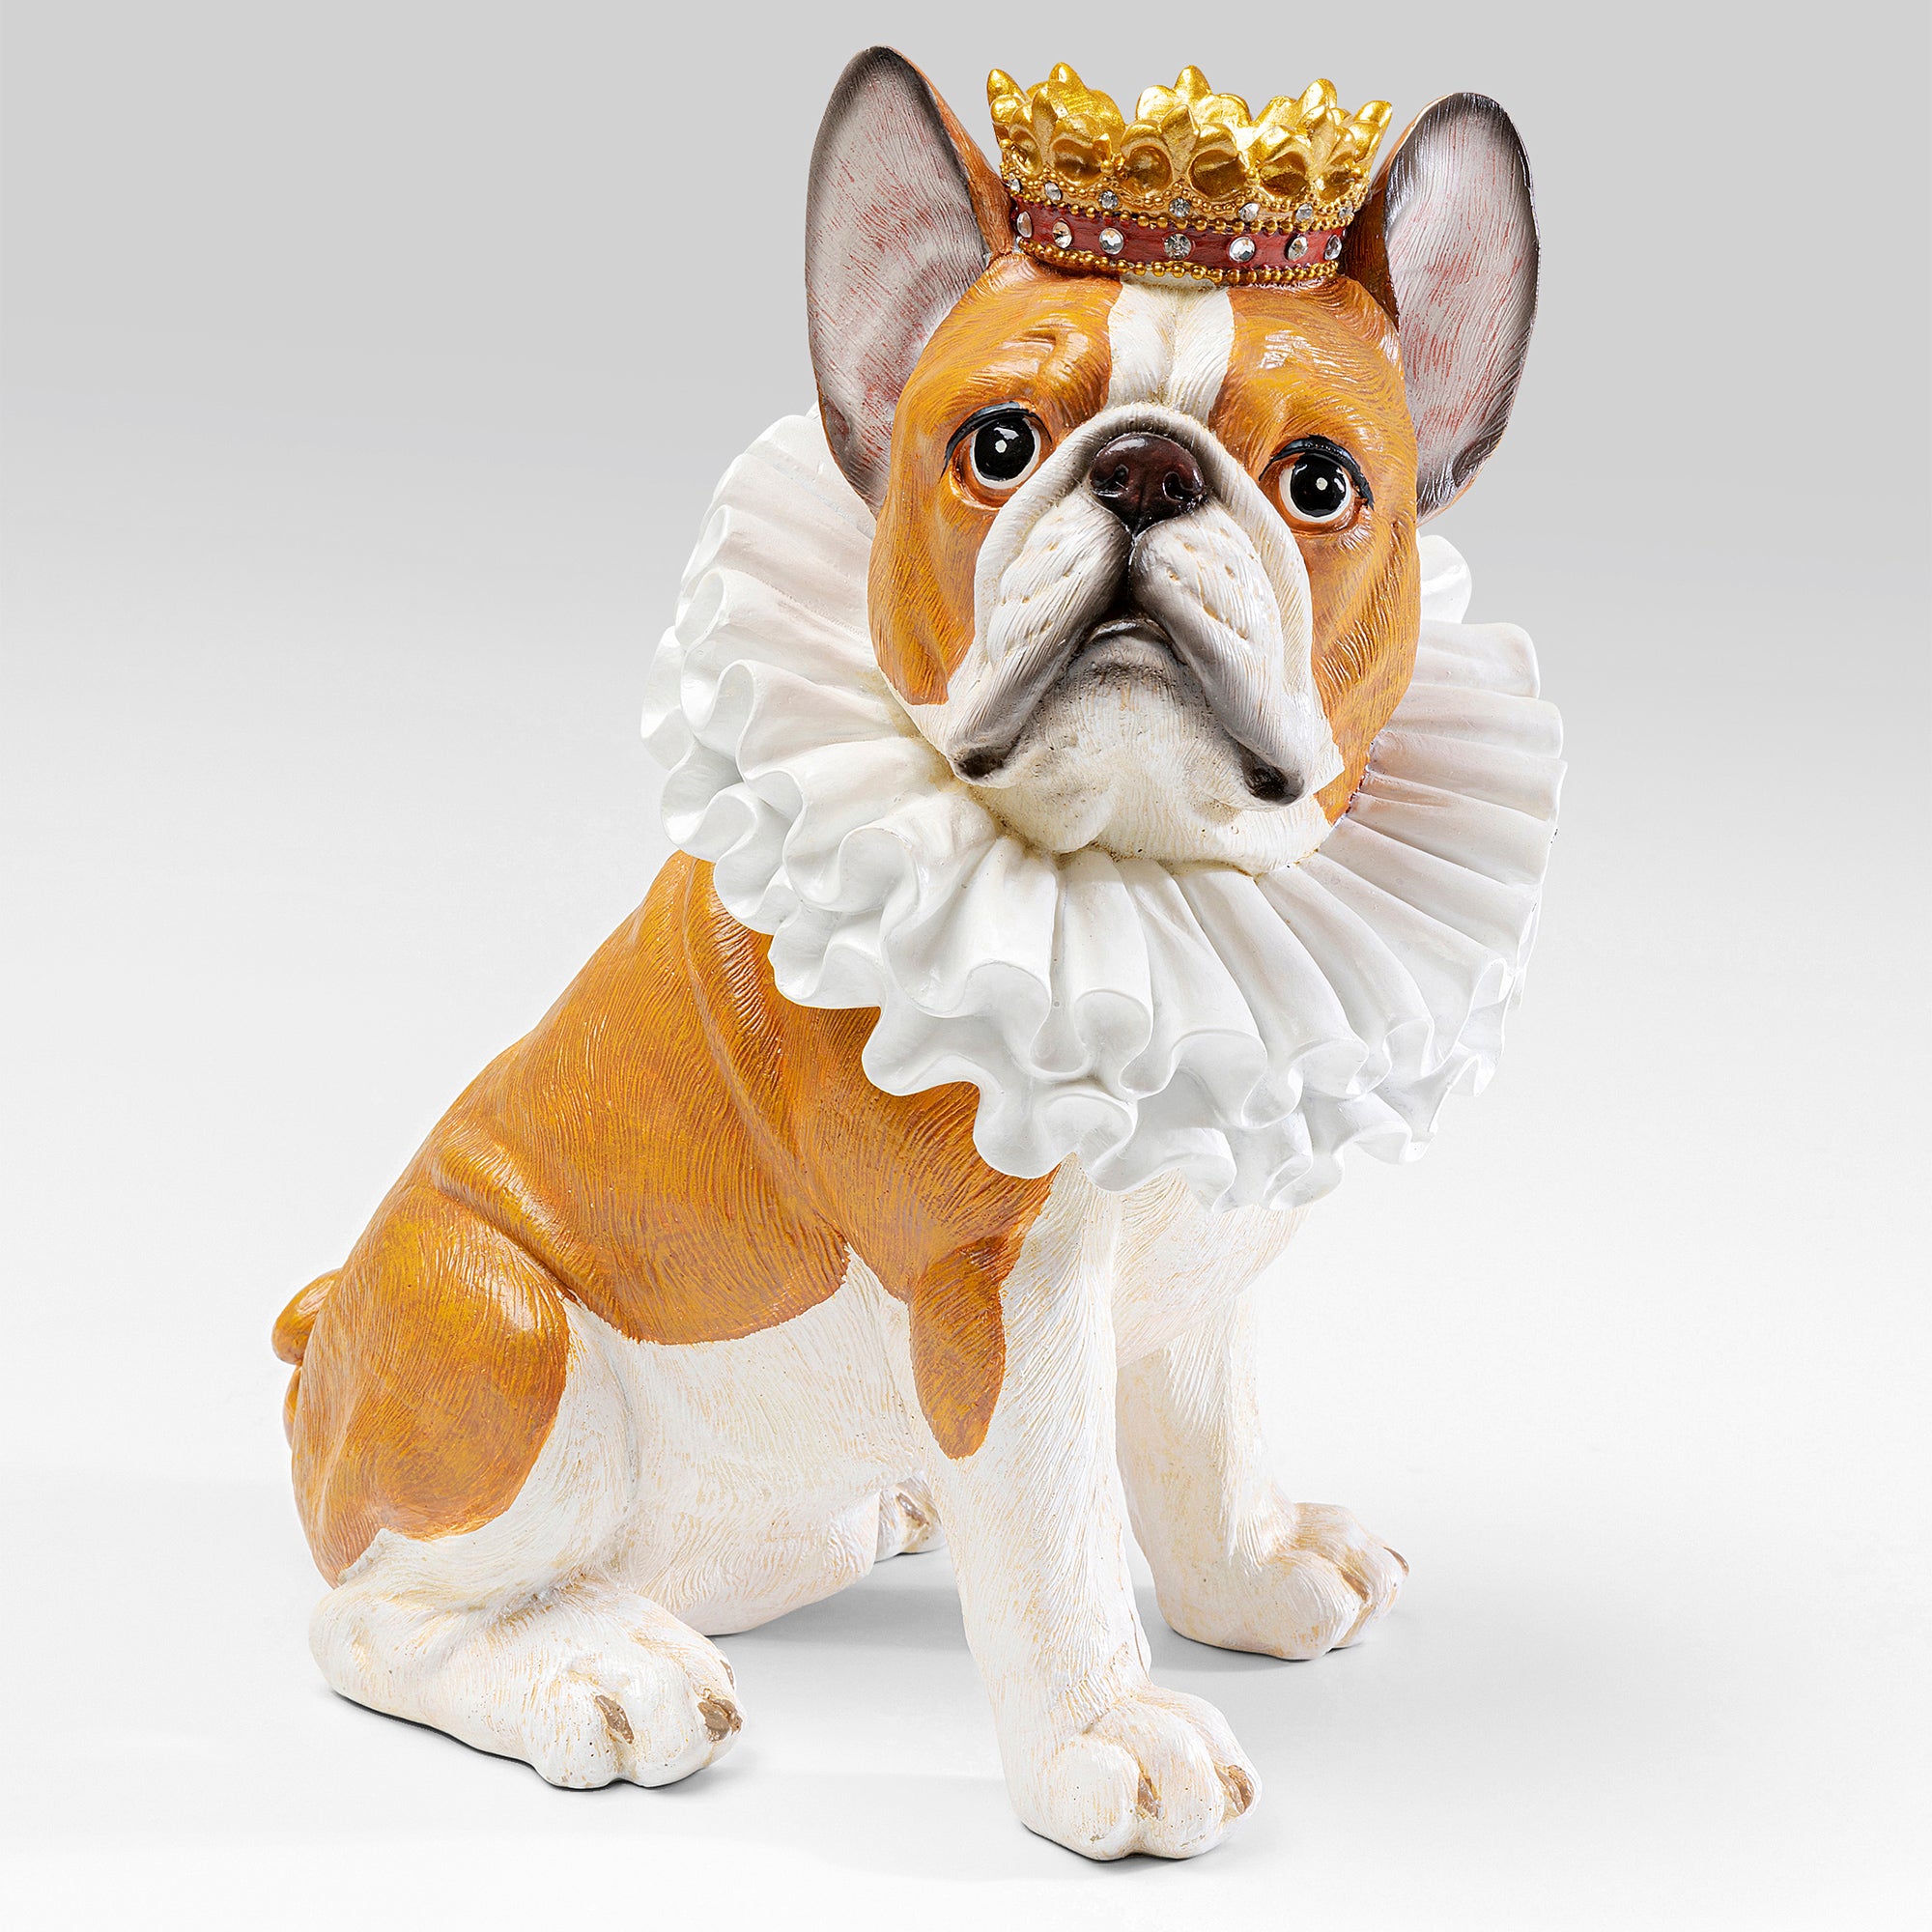 King Dog Sculpture